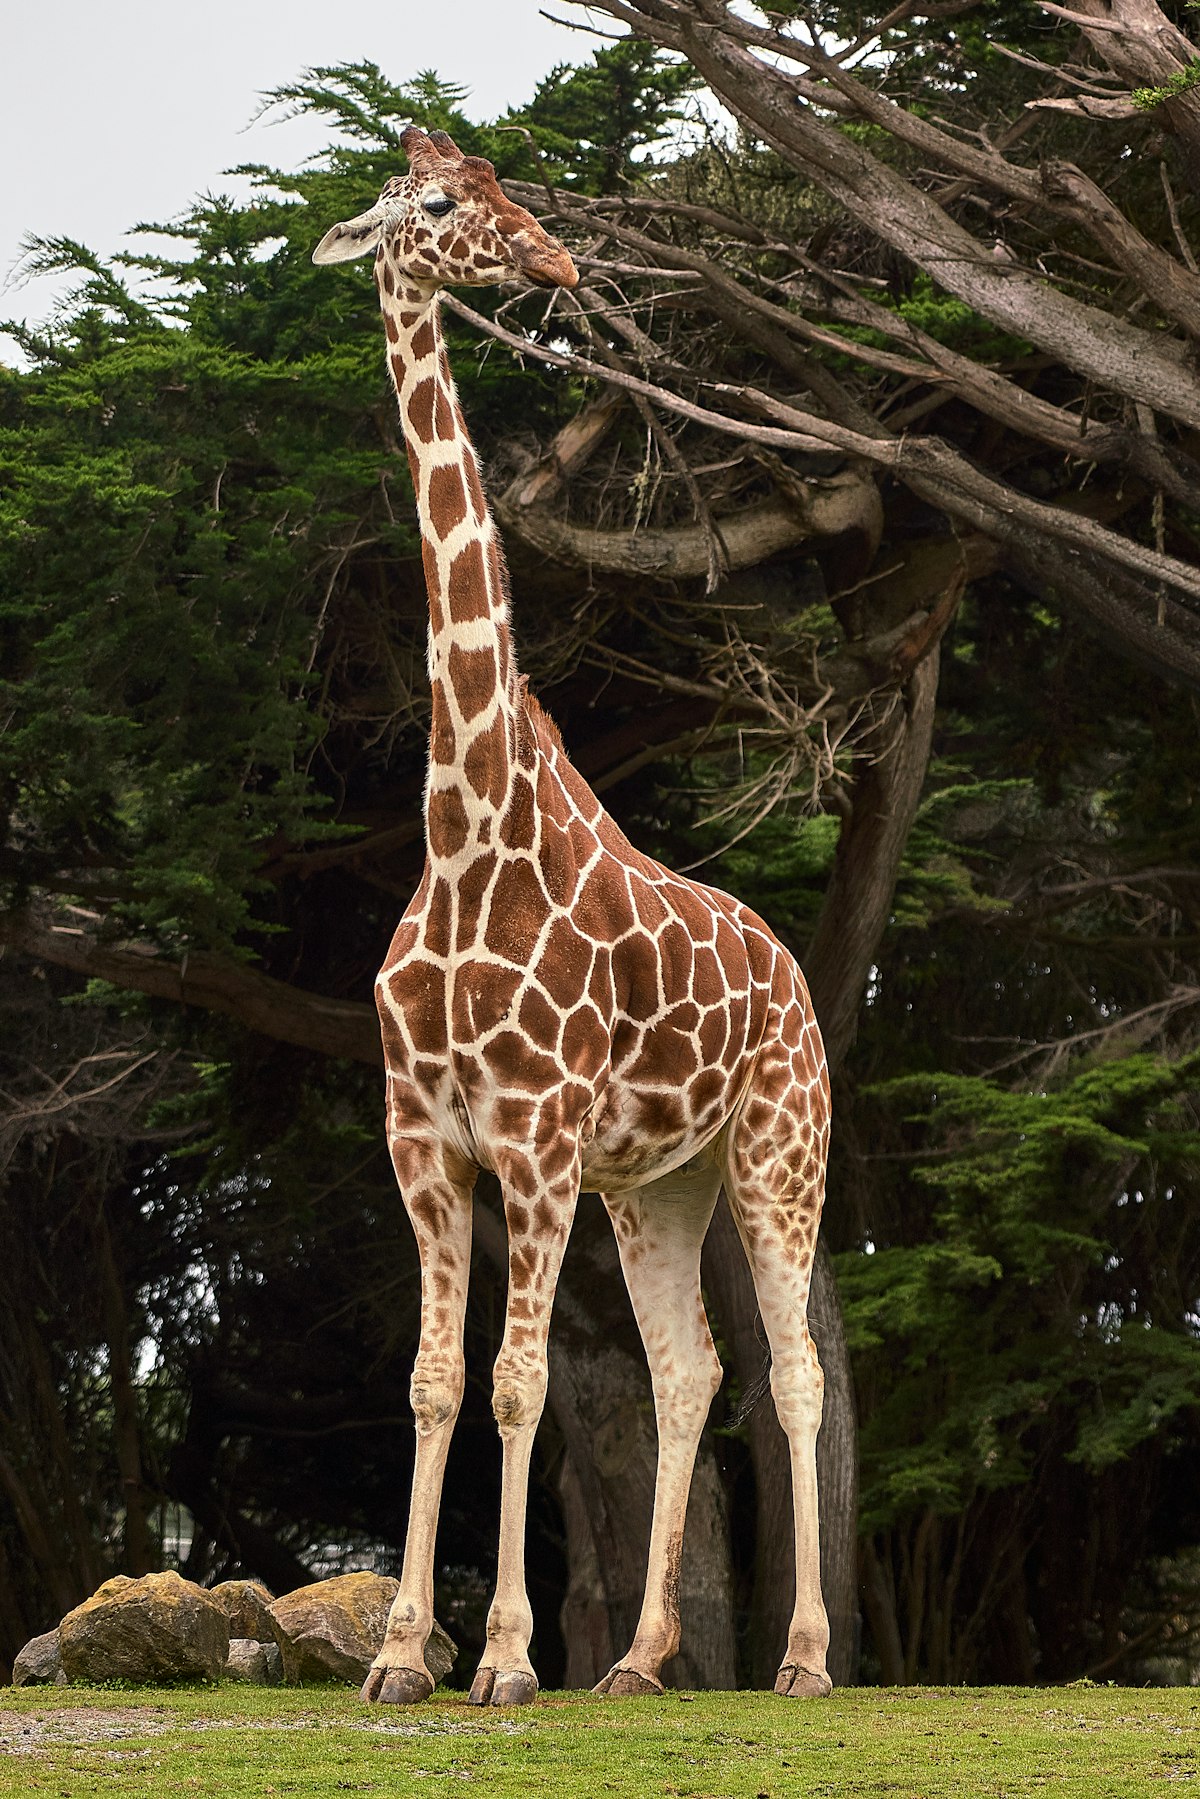 The Majestic Giraffe: Giants of the Savanna